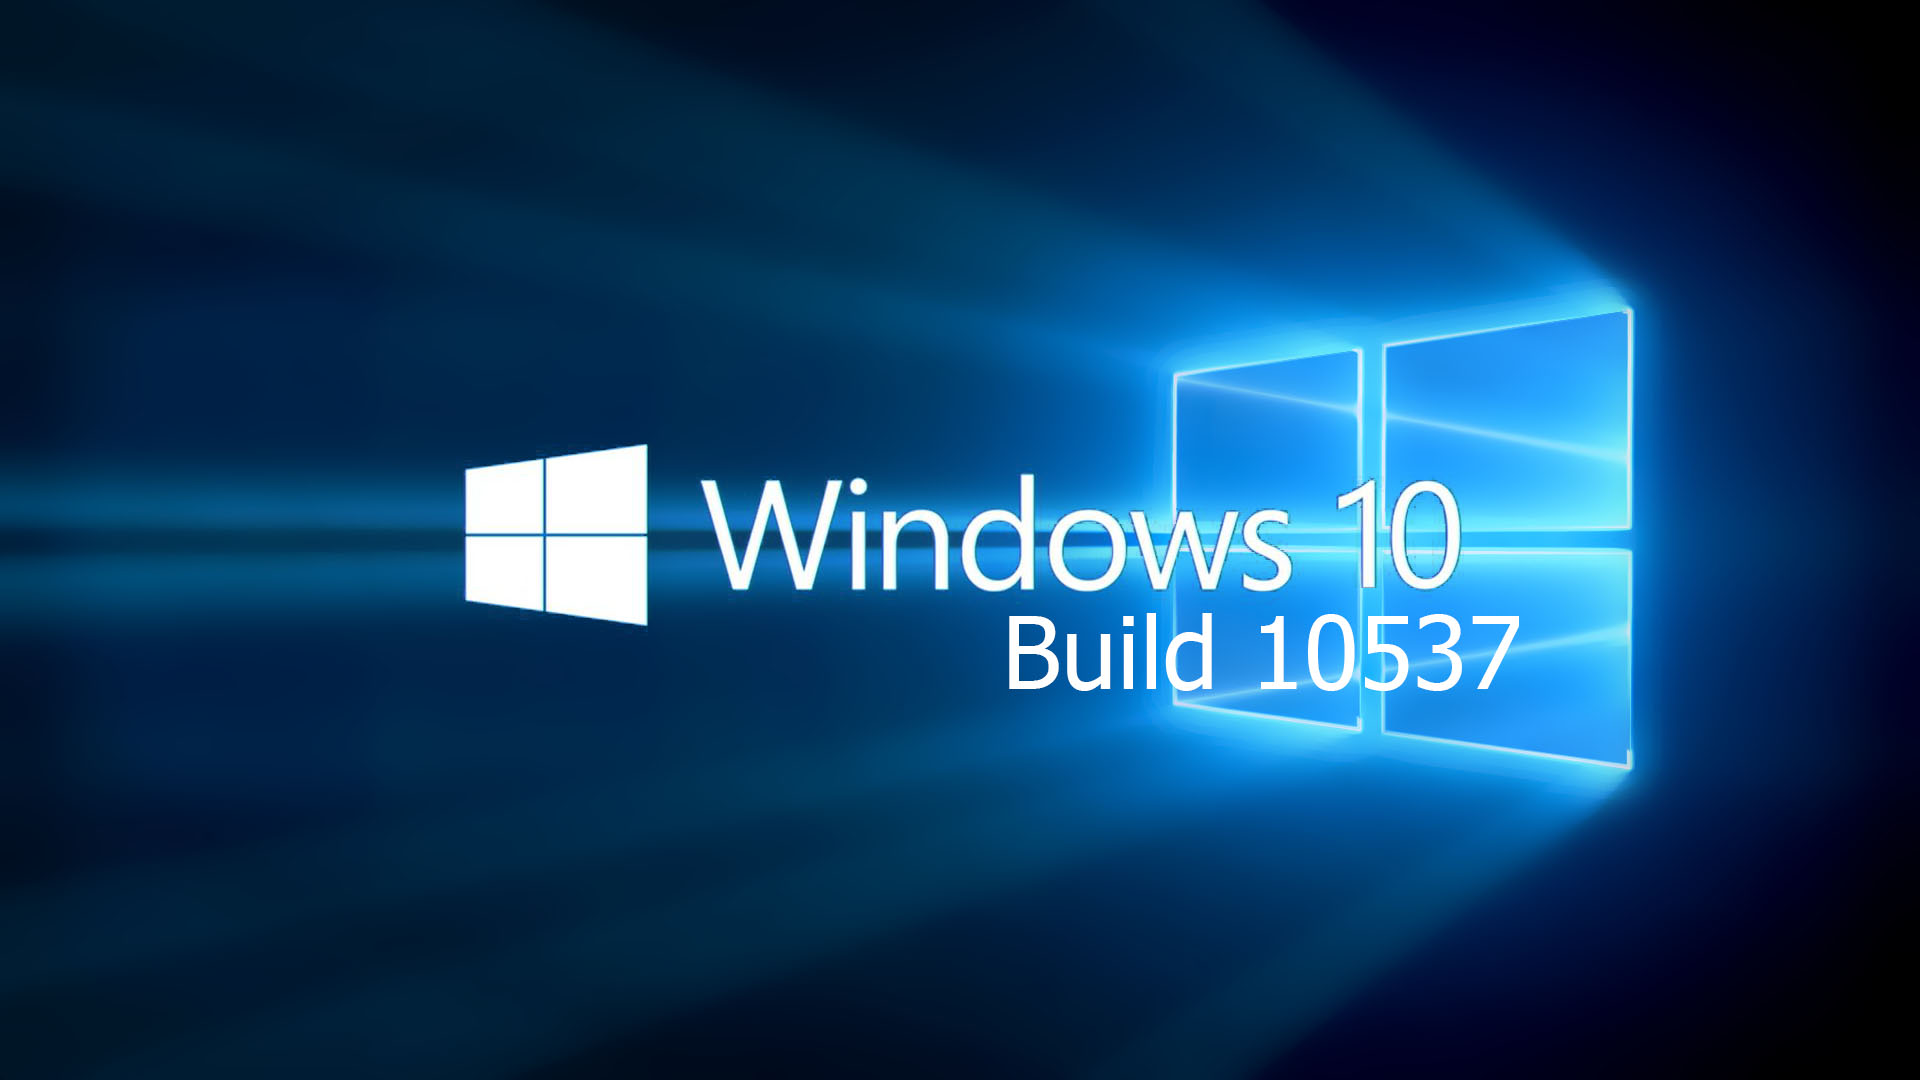 Windows 10 Build 10537